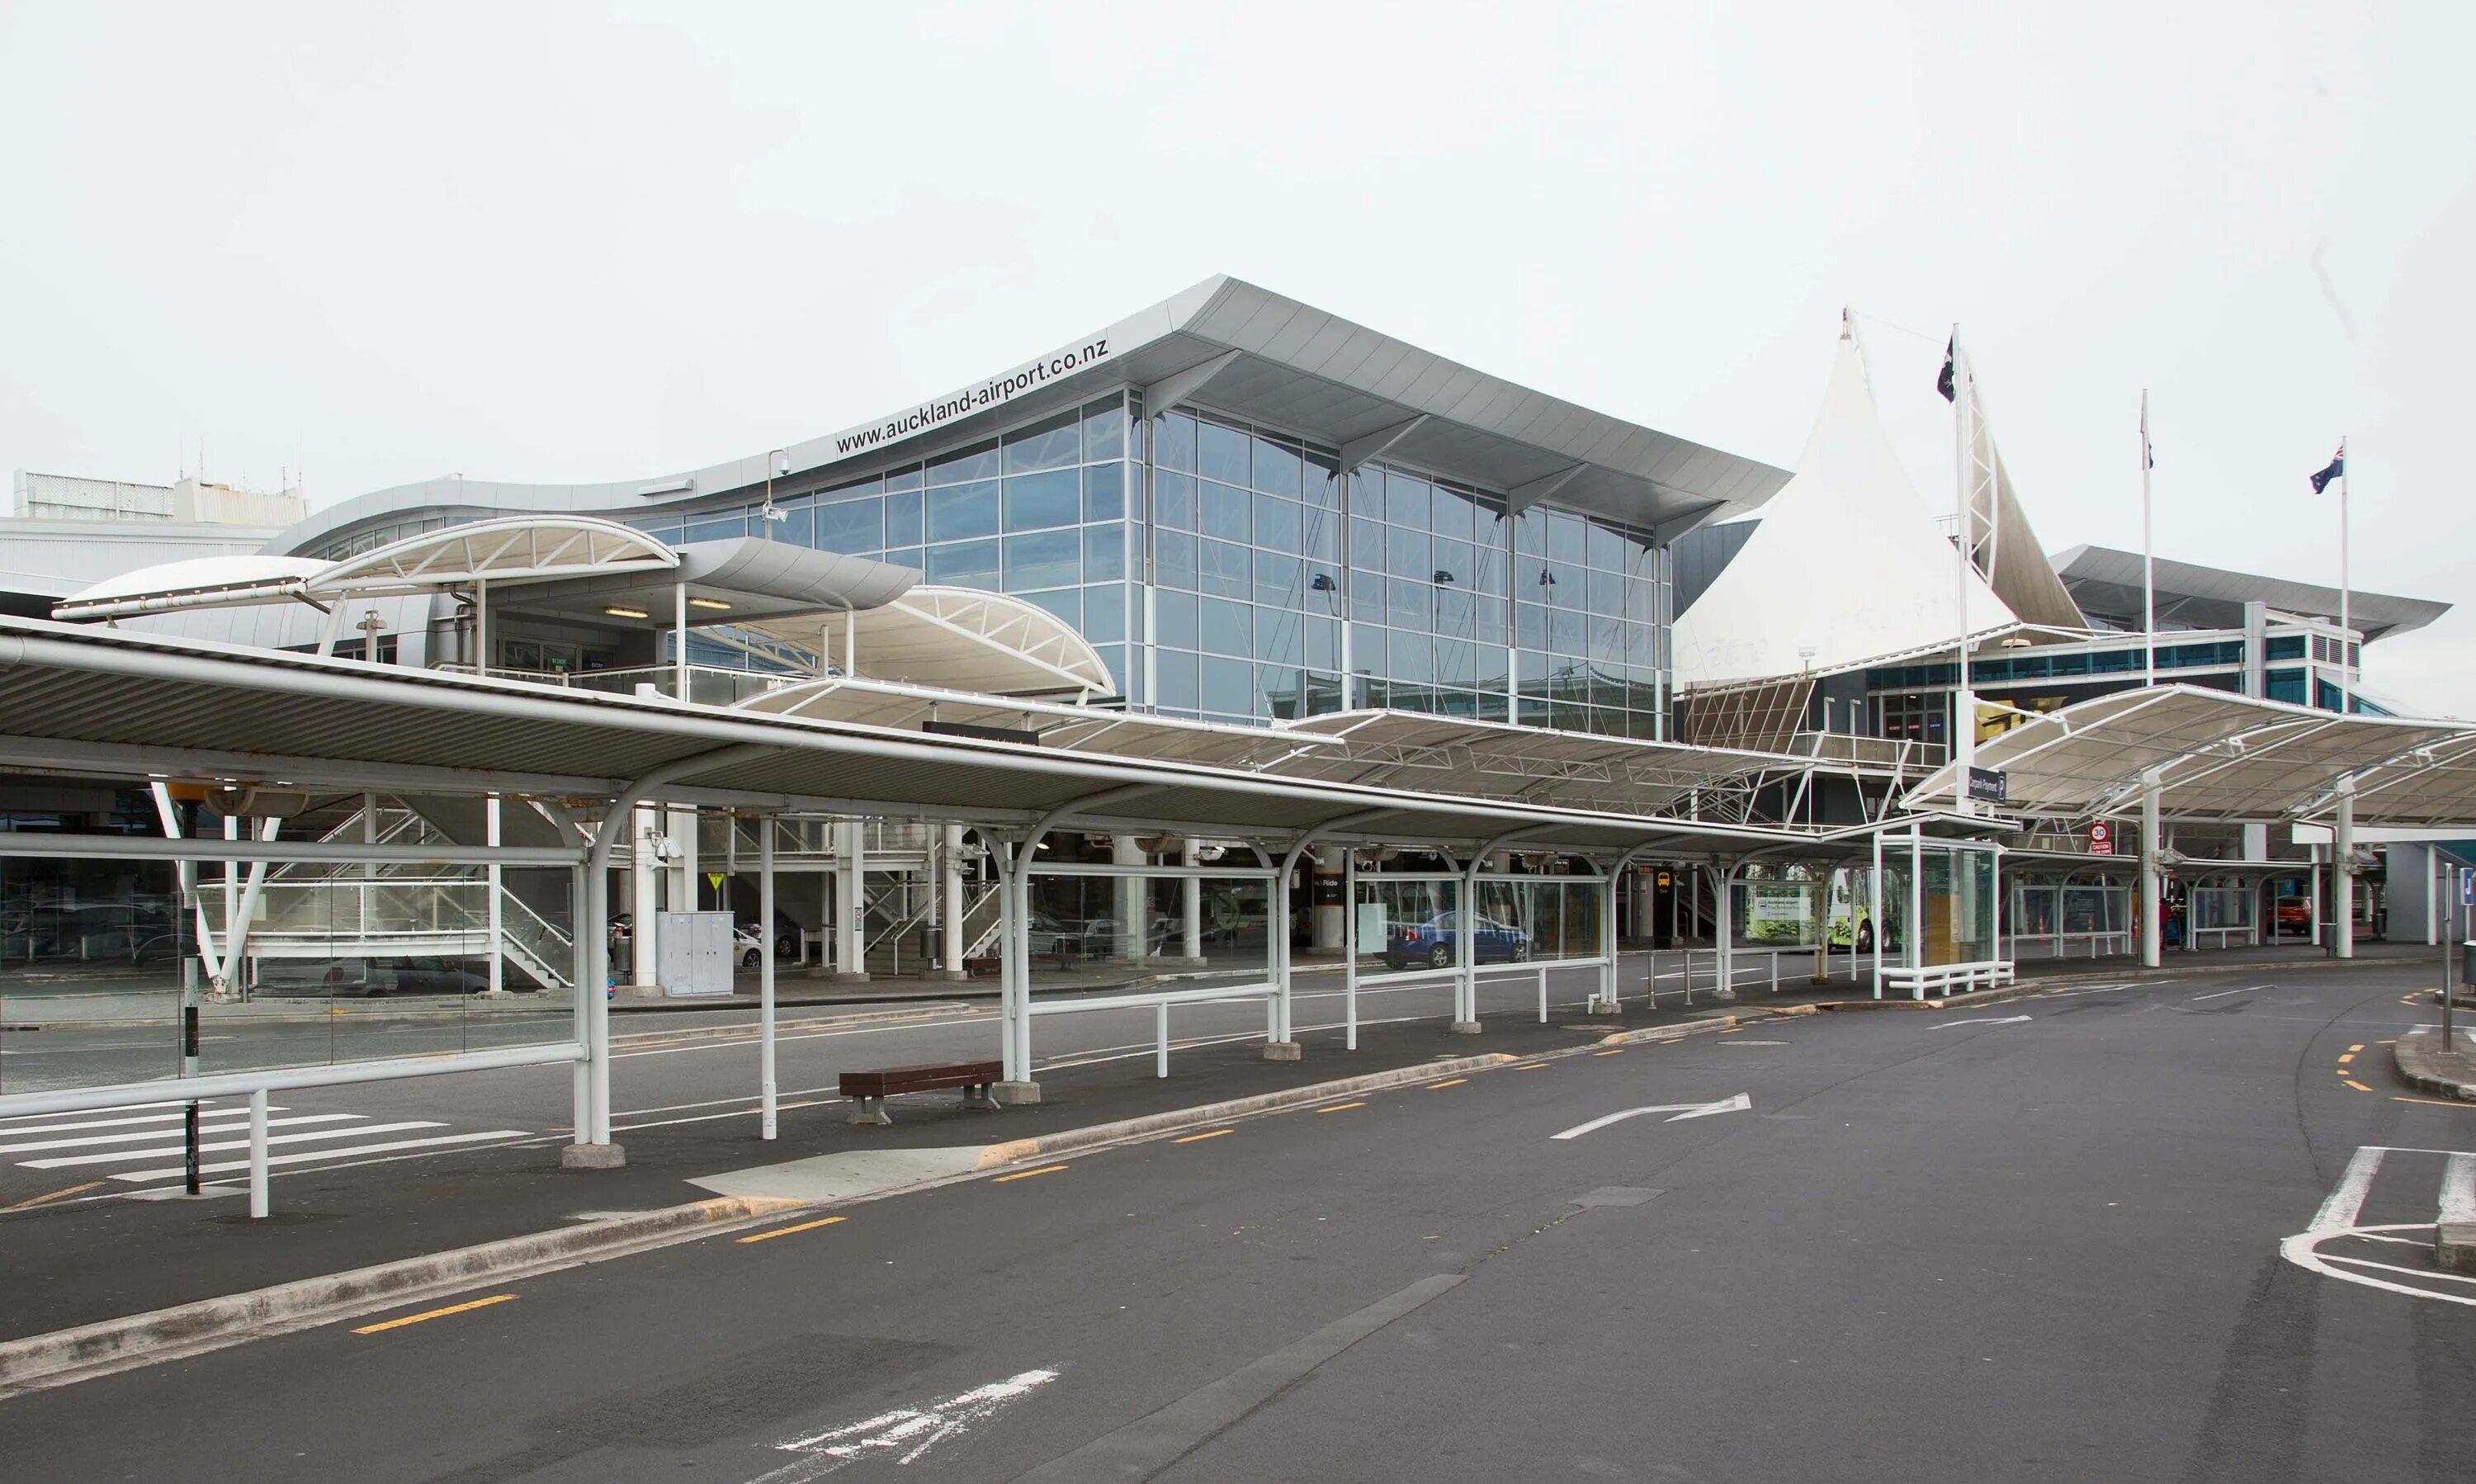 Аэропорт 30 минут. Международный аэропорт Веллингтон, новая Зеландия. Гамильтон новая Зеландия аэропорт. Аэропорт Окленд новая Зеландия. Аэропорт 2015.